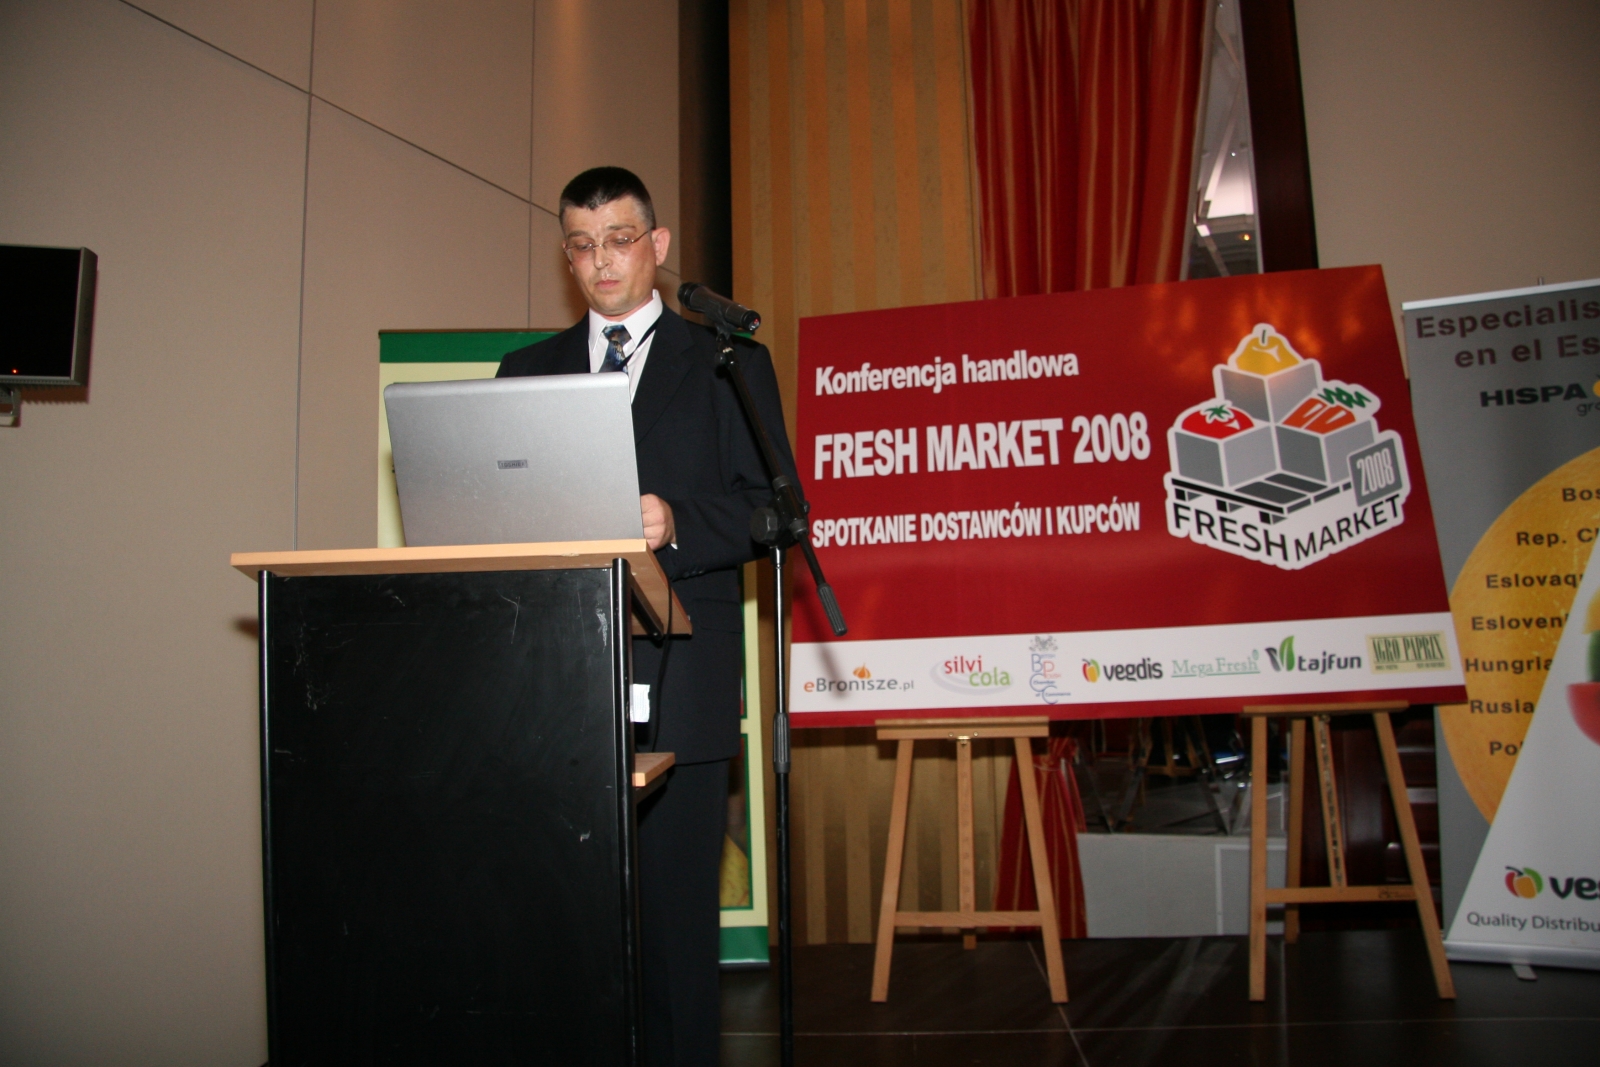 Fresh Market Conference 2008